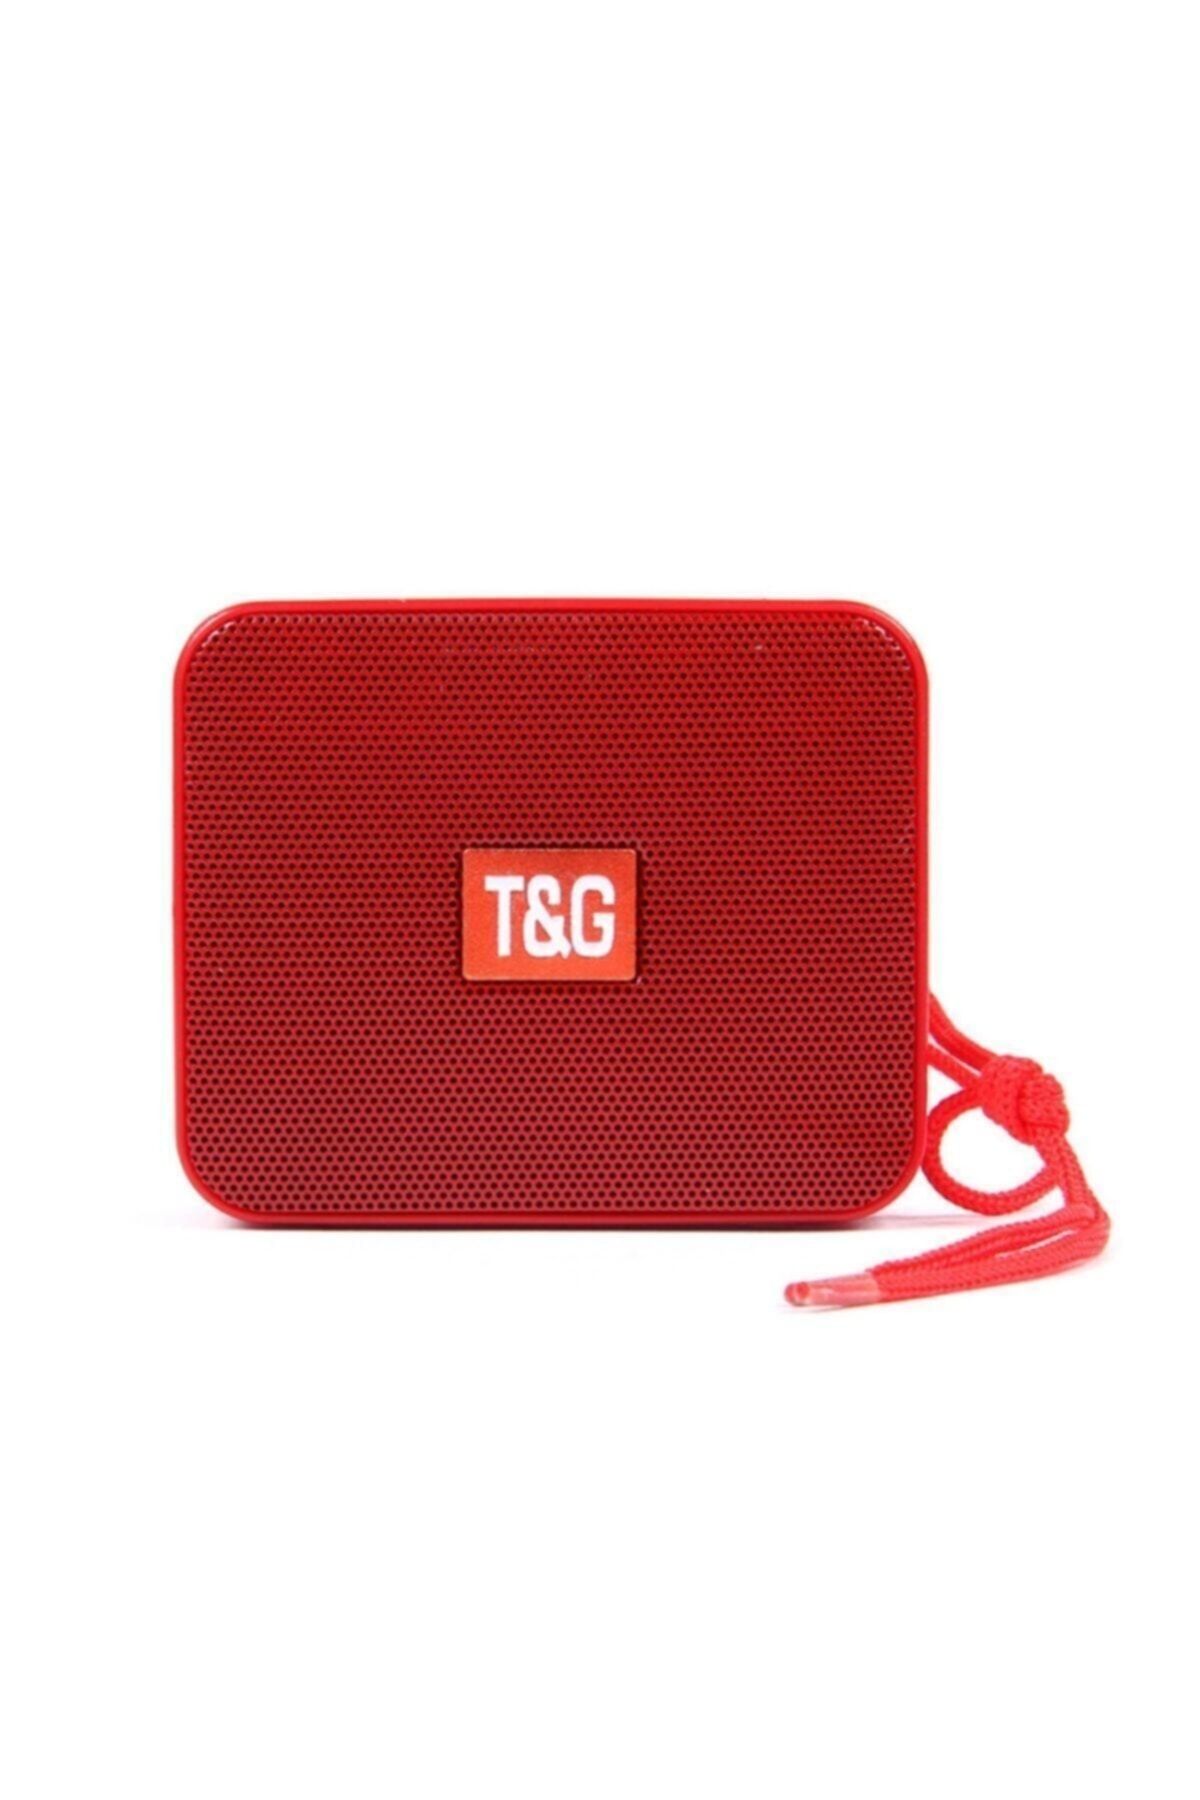 T G Bluetooth Hoparlör Kablosuz Speaker Ses Bombası 166 Kırmızı